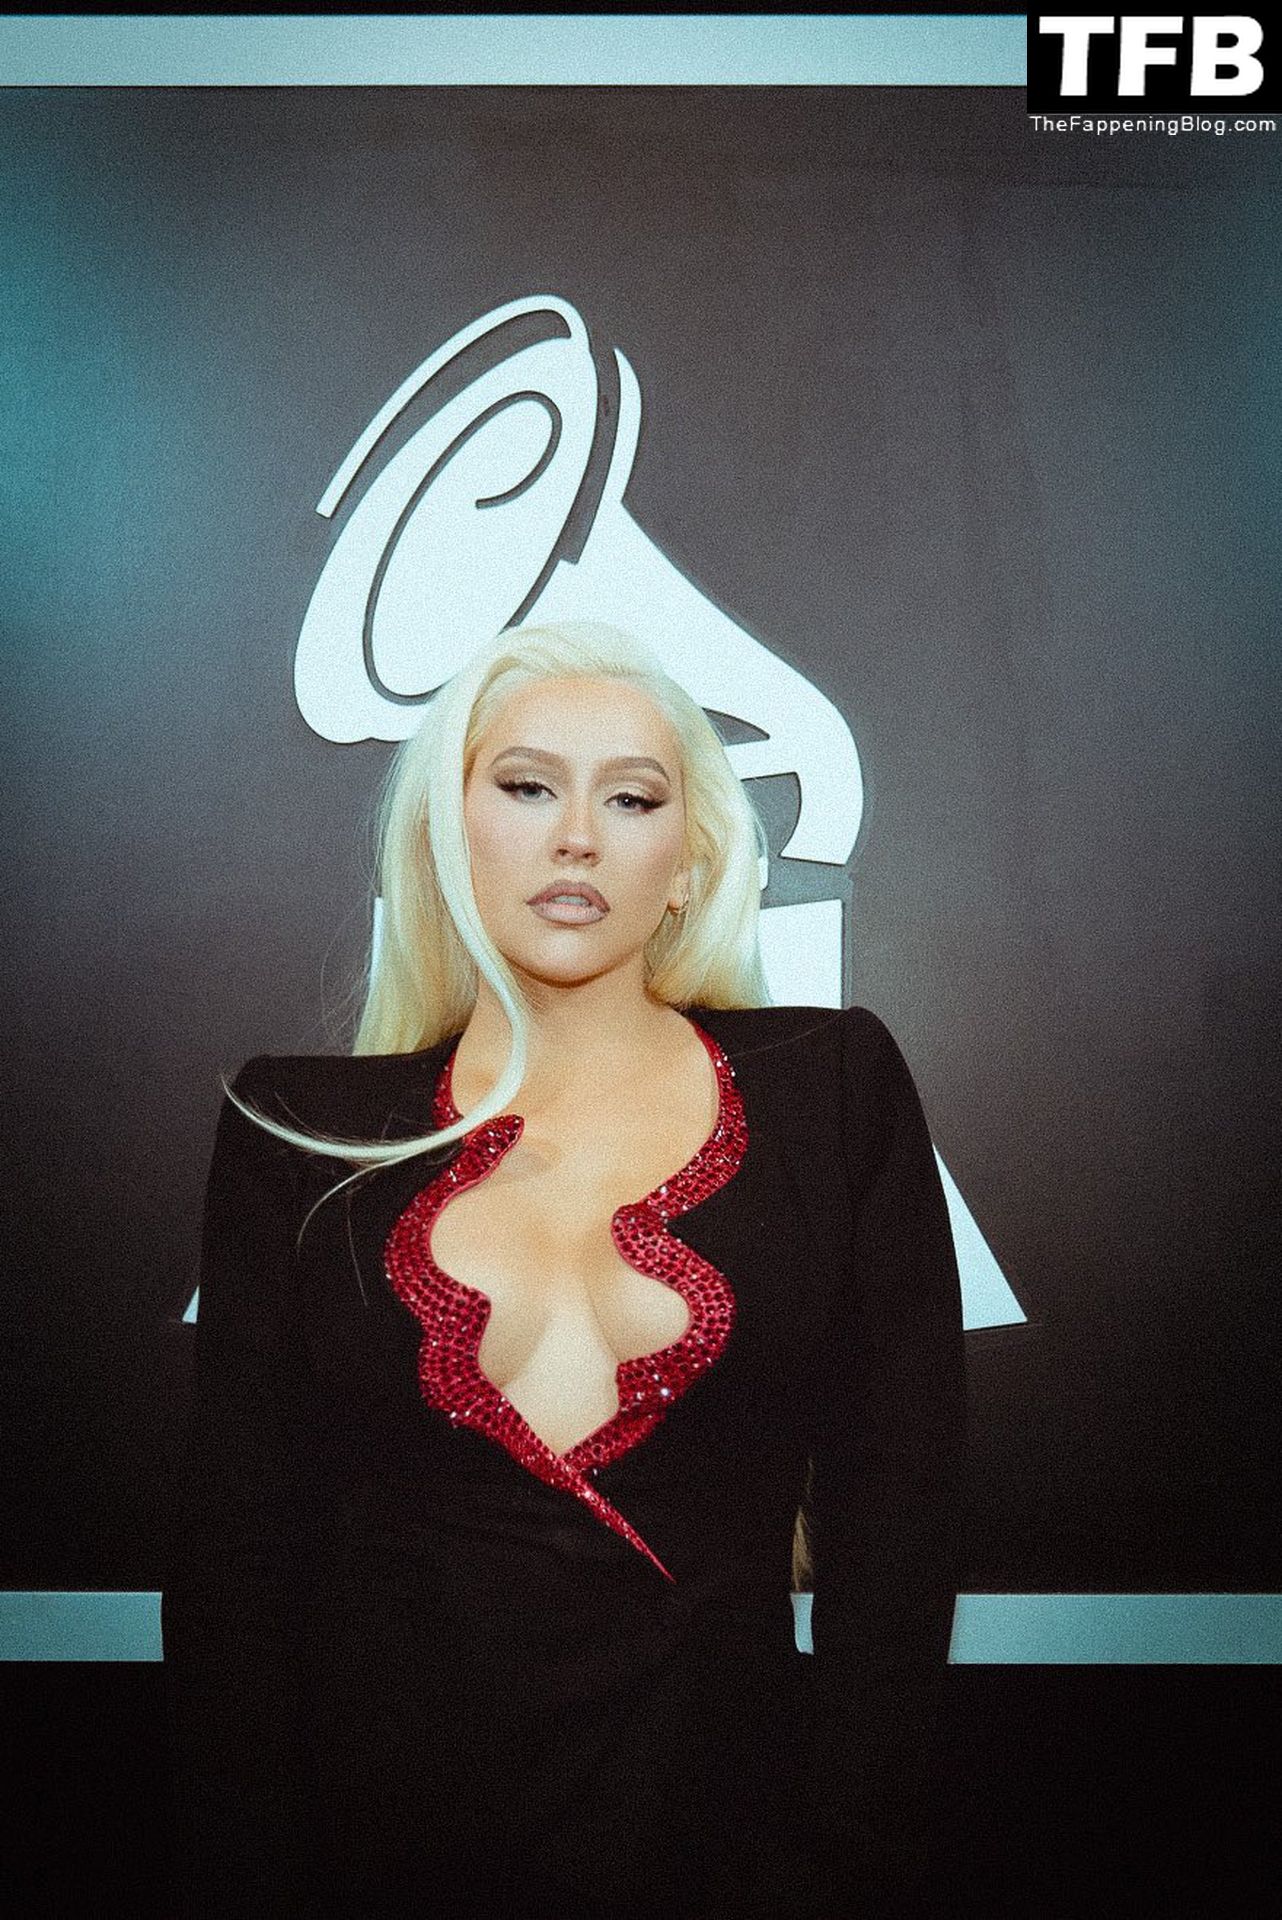 Christina-Aguilera-Tits-The-Fappening-Blog-2.jpg